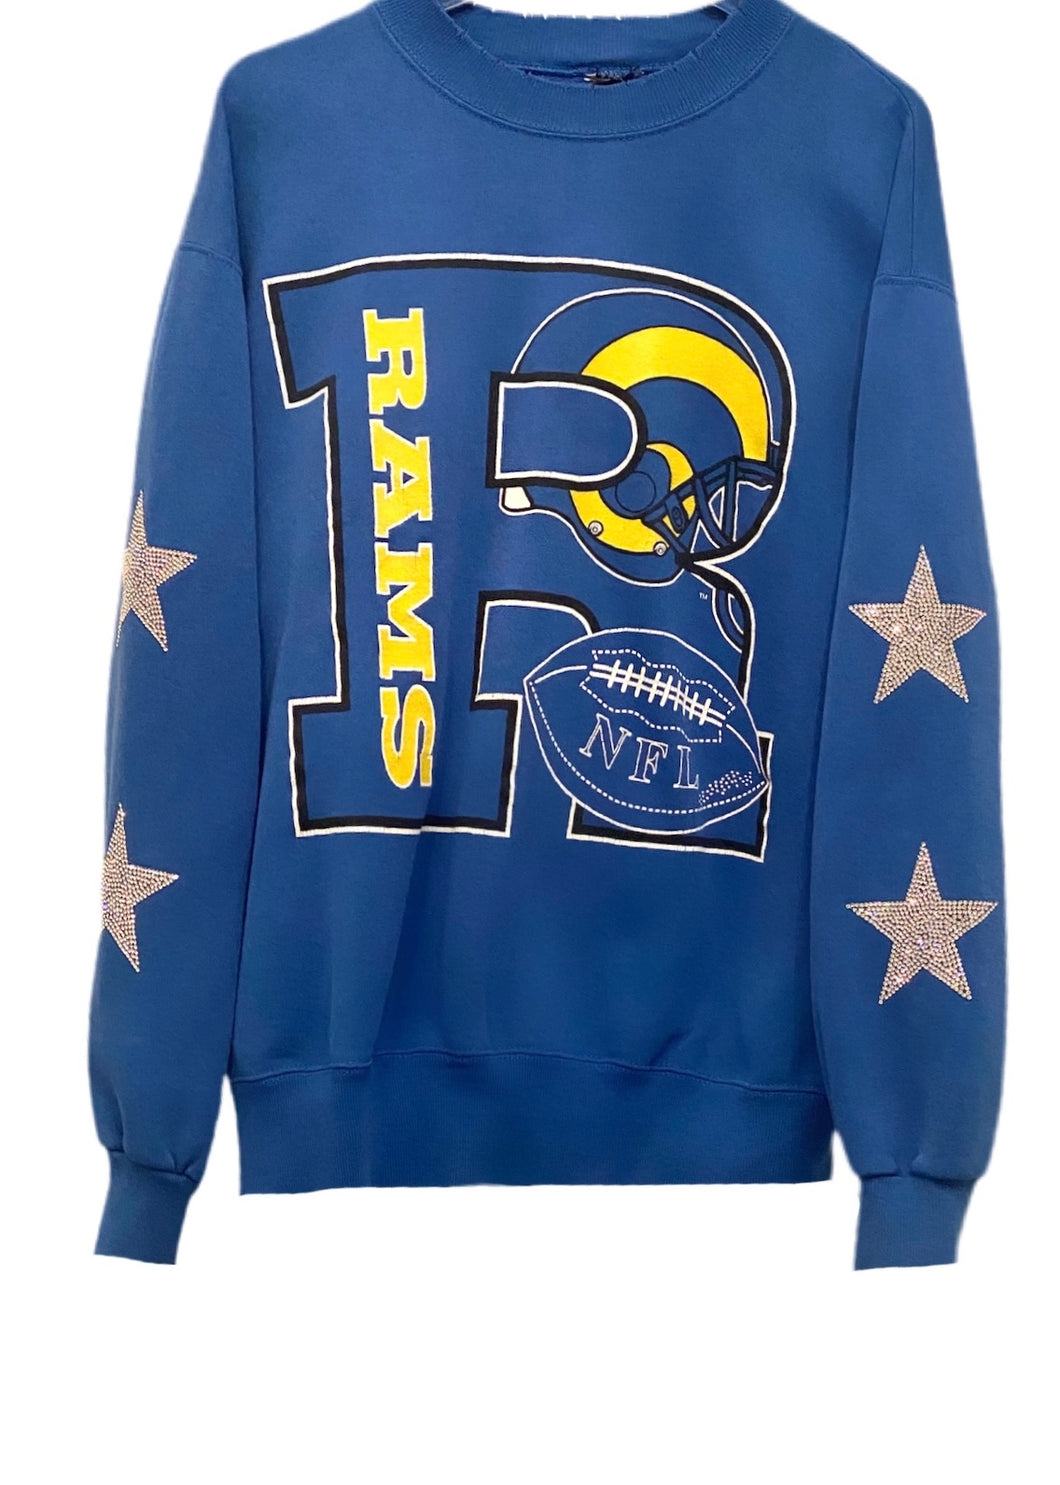 Los Angeles Rams, NFL One of a KIND Vintage LA Rams Sweatshirt with Crystal Star Design